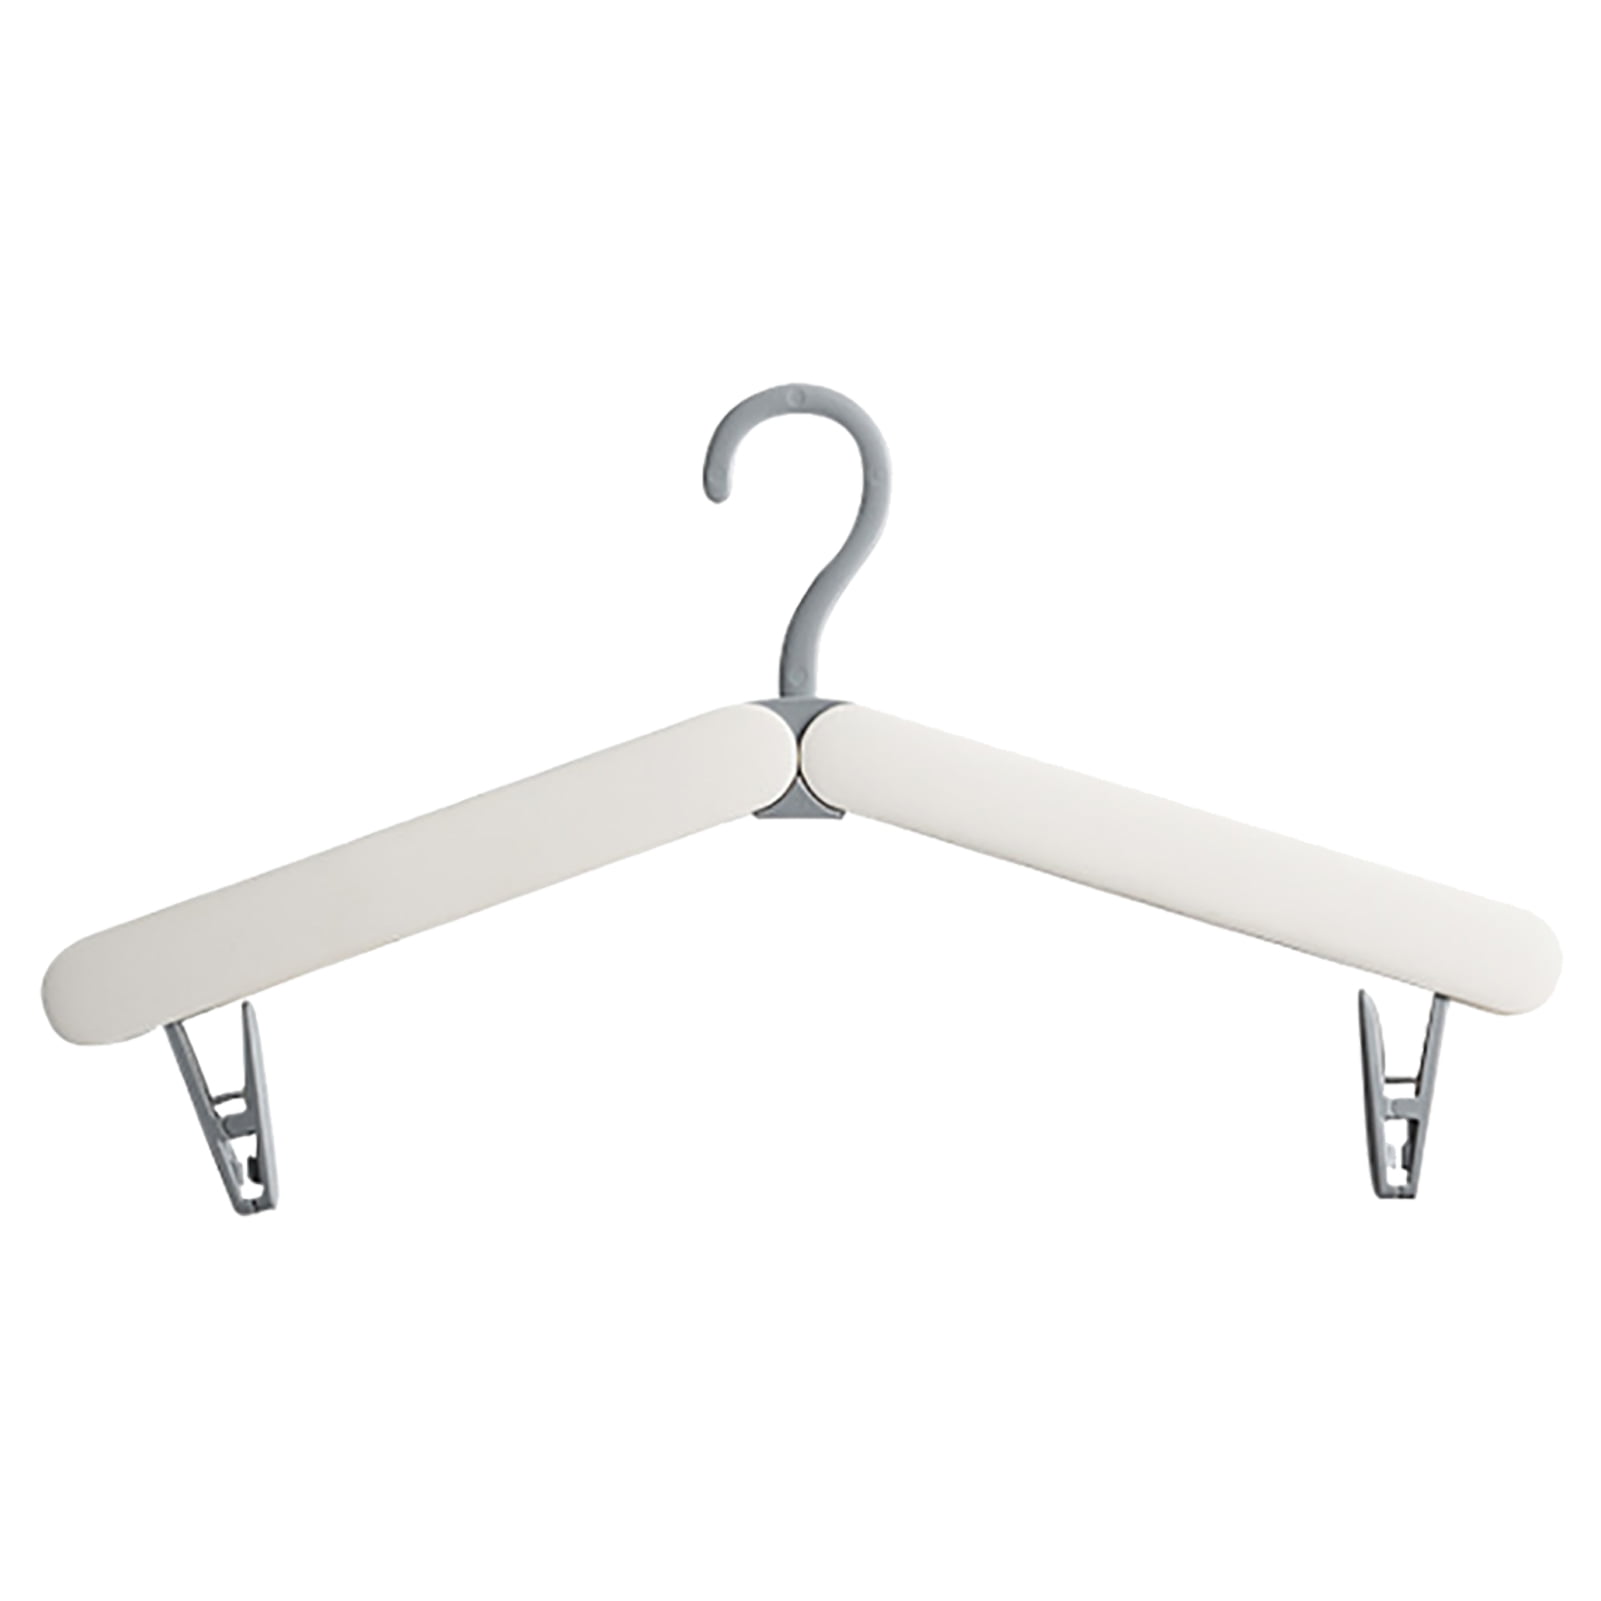 Cloth Rack Travel Hanger Non-Slip Plastic Drying Clothespin Trouser Foldable